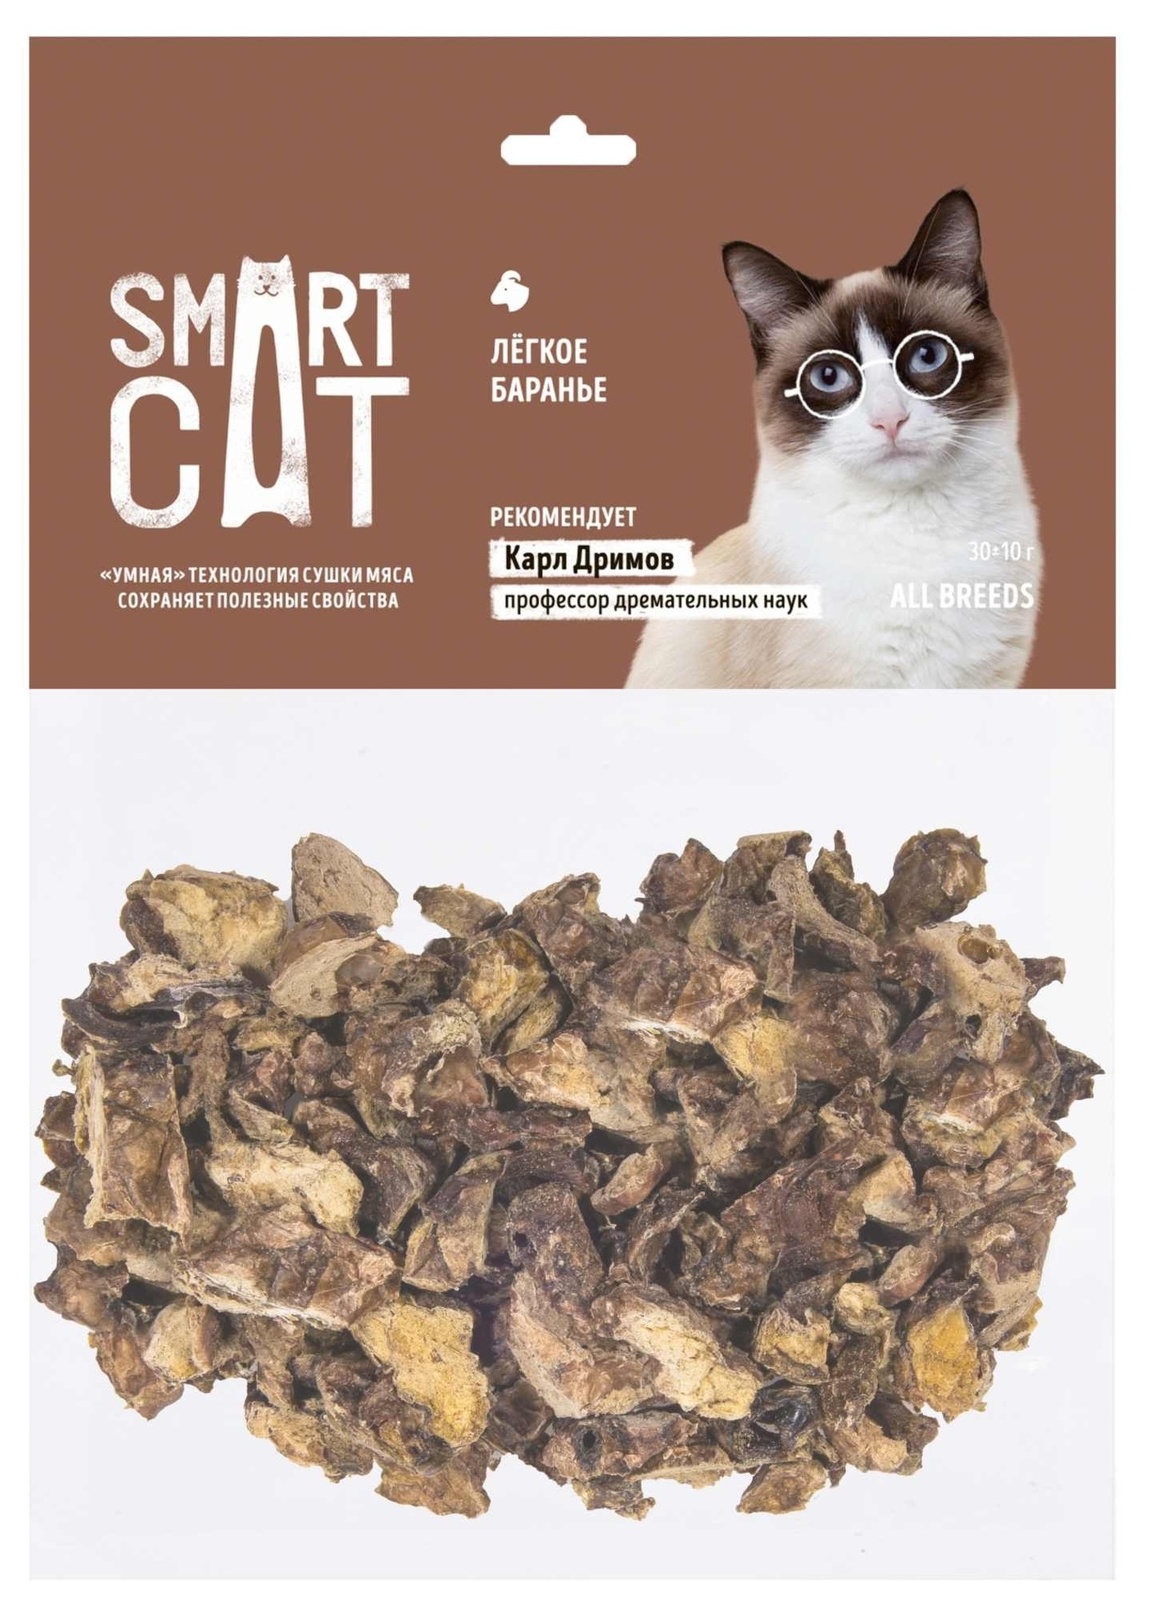 Smart Cat лакомства Smart Cat лакомства легкое баранье (30 г) smart cat лакомства smart cat лакомства легкое говяжье 30 г